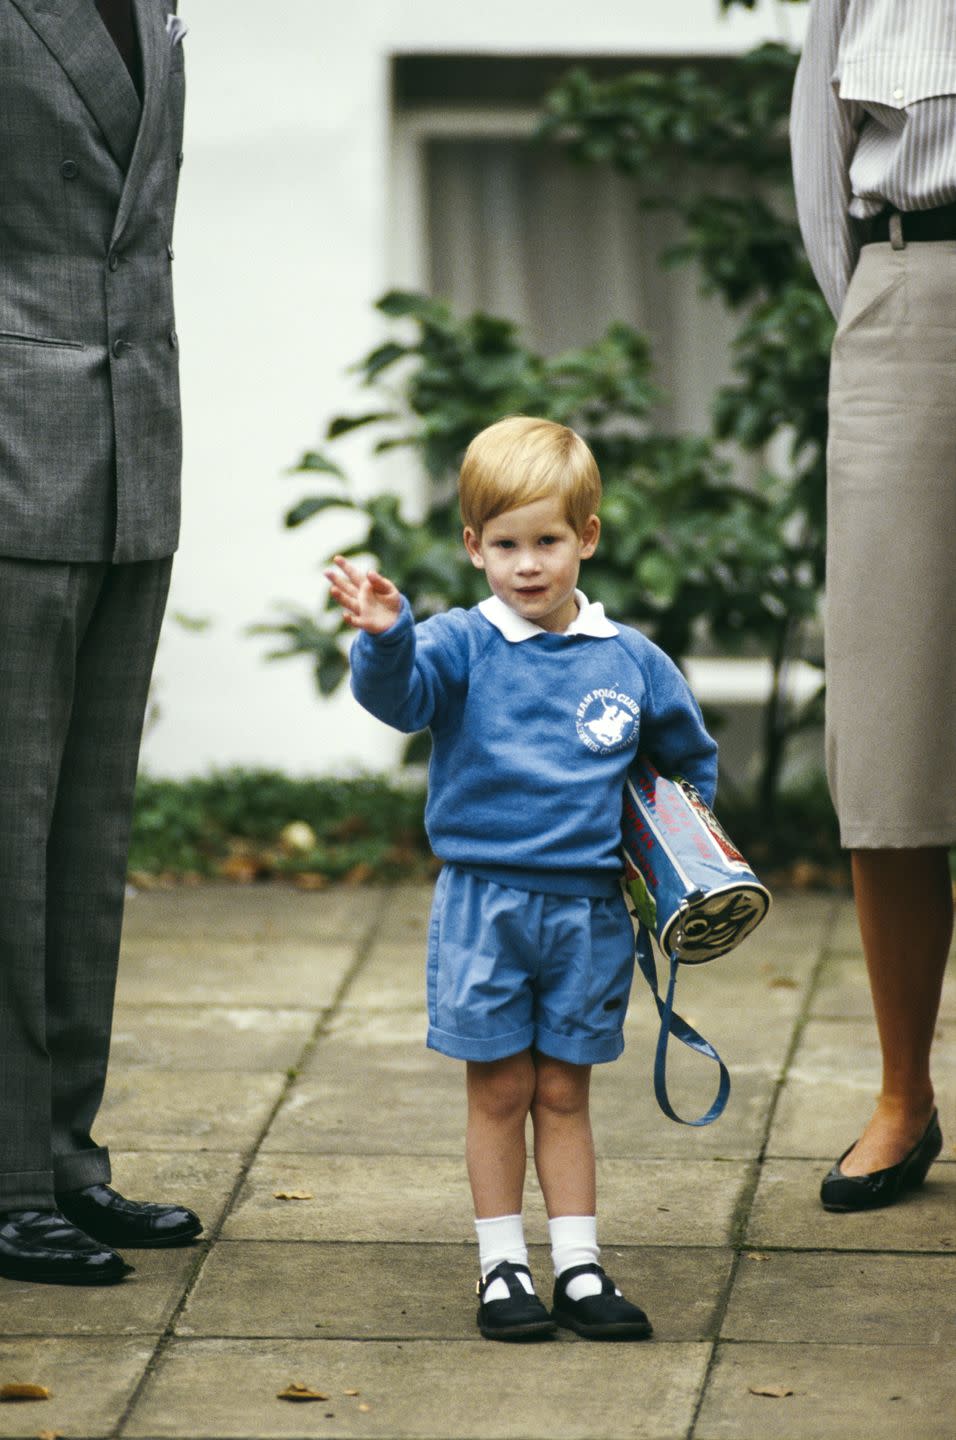 9) Prince Harry at Mrs Mynor's Nursery School, London